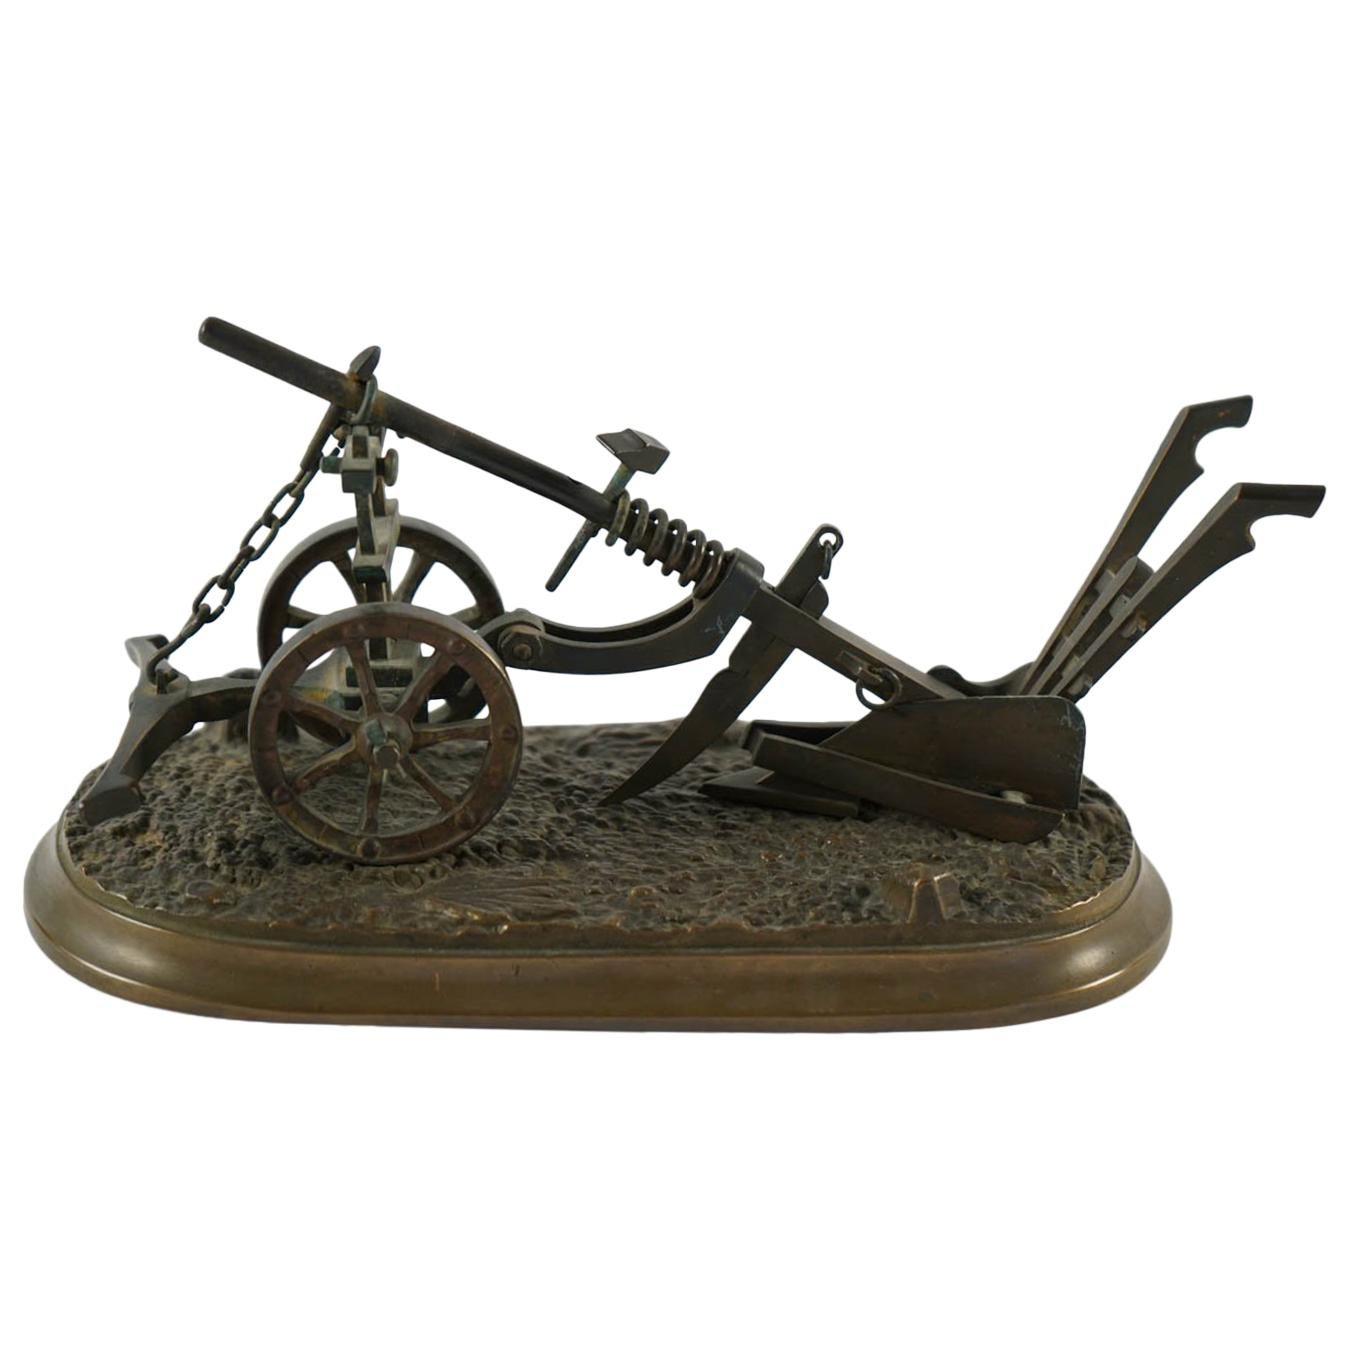 Miniature Bronze Plow, circa 1900